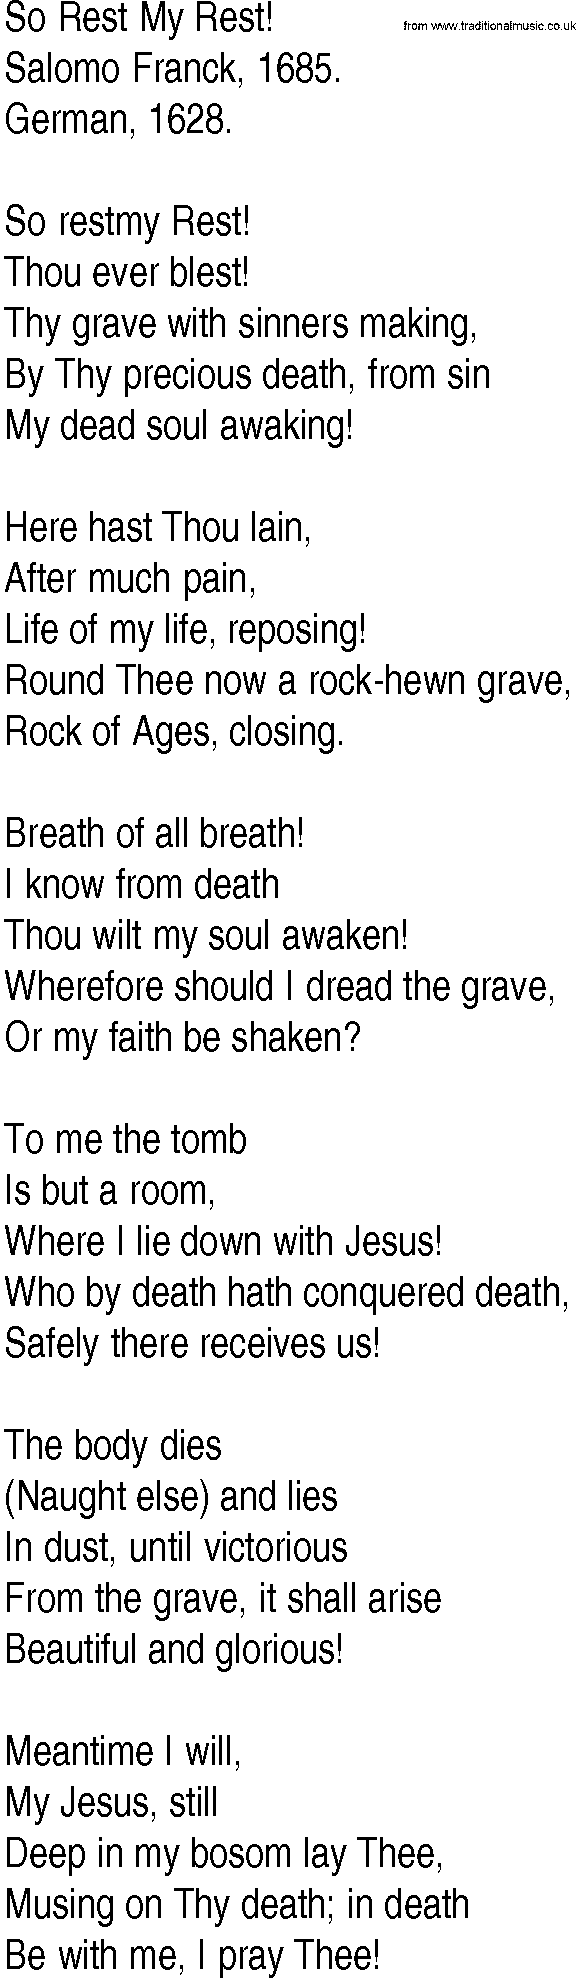 Hymn and Gospel Song: So Rest My Rest! by Salomo Franck lyrics